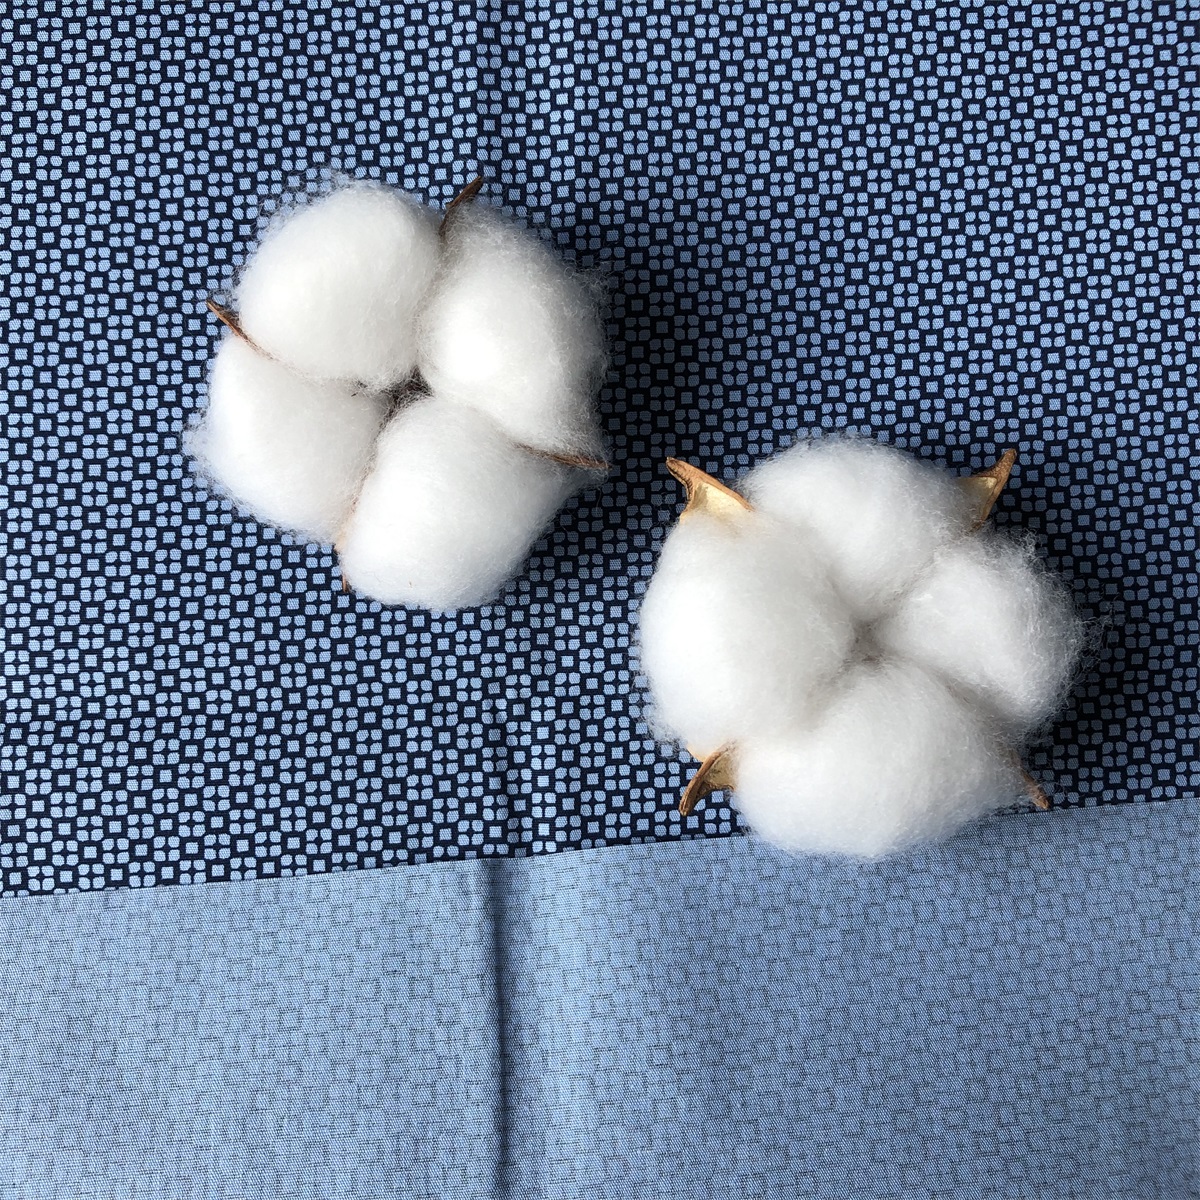 Sun-rising Textile Cotton fabric fashion design soft comfortable 100% cotton poplin printed fabric for men's shirts